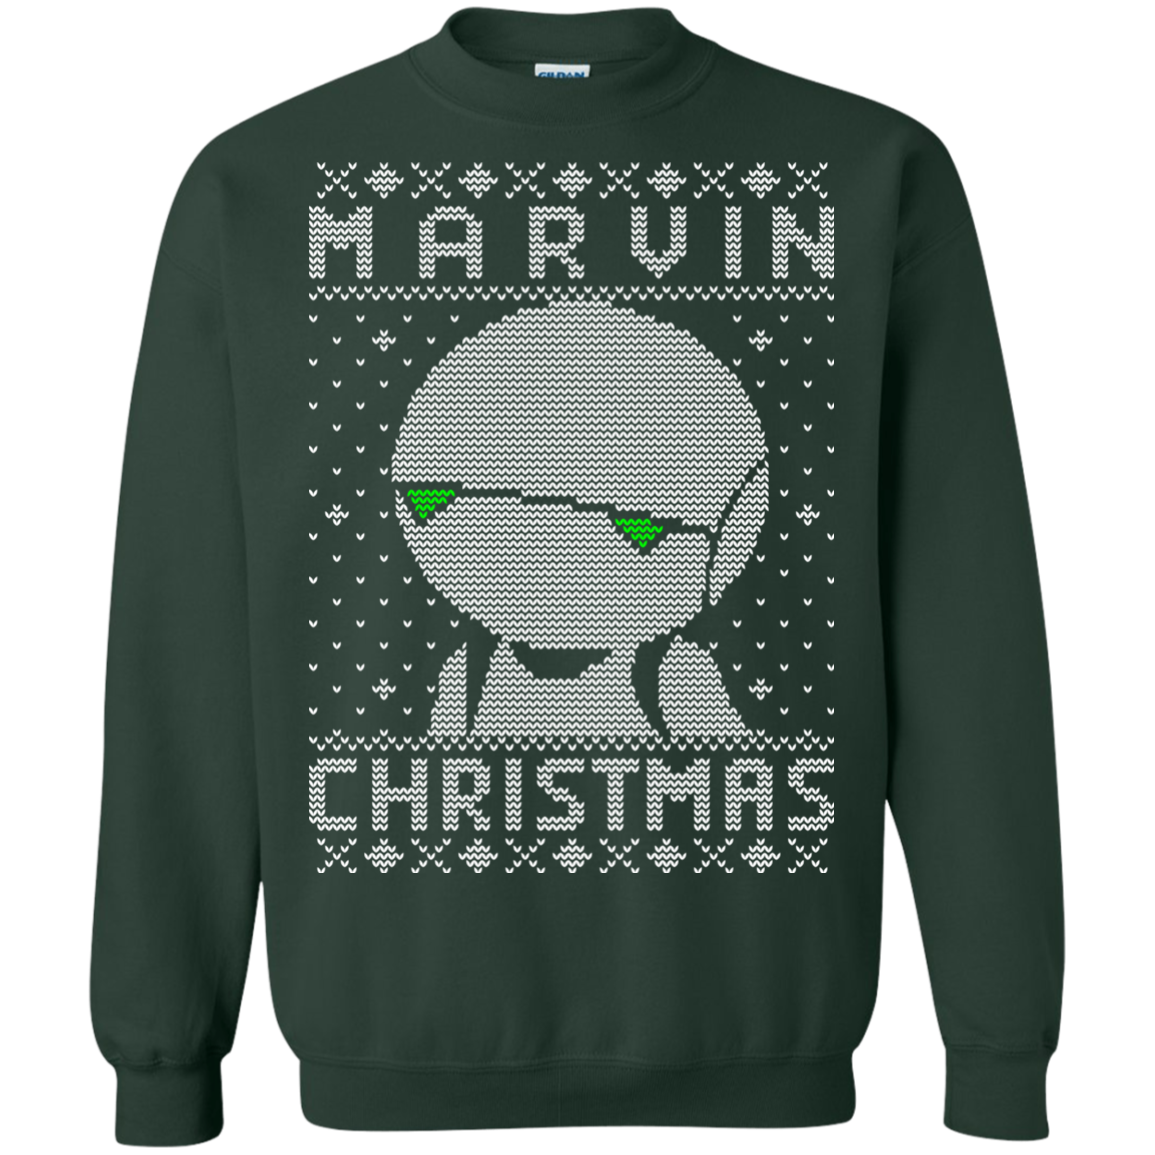 Marvin Christmas Crewneck Sweatshirt